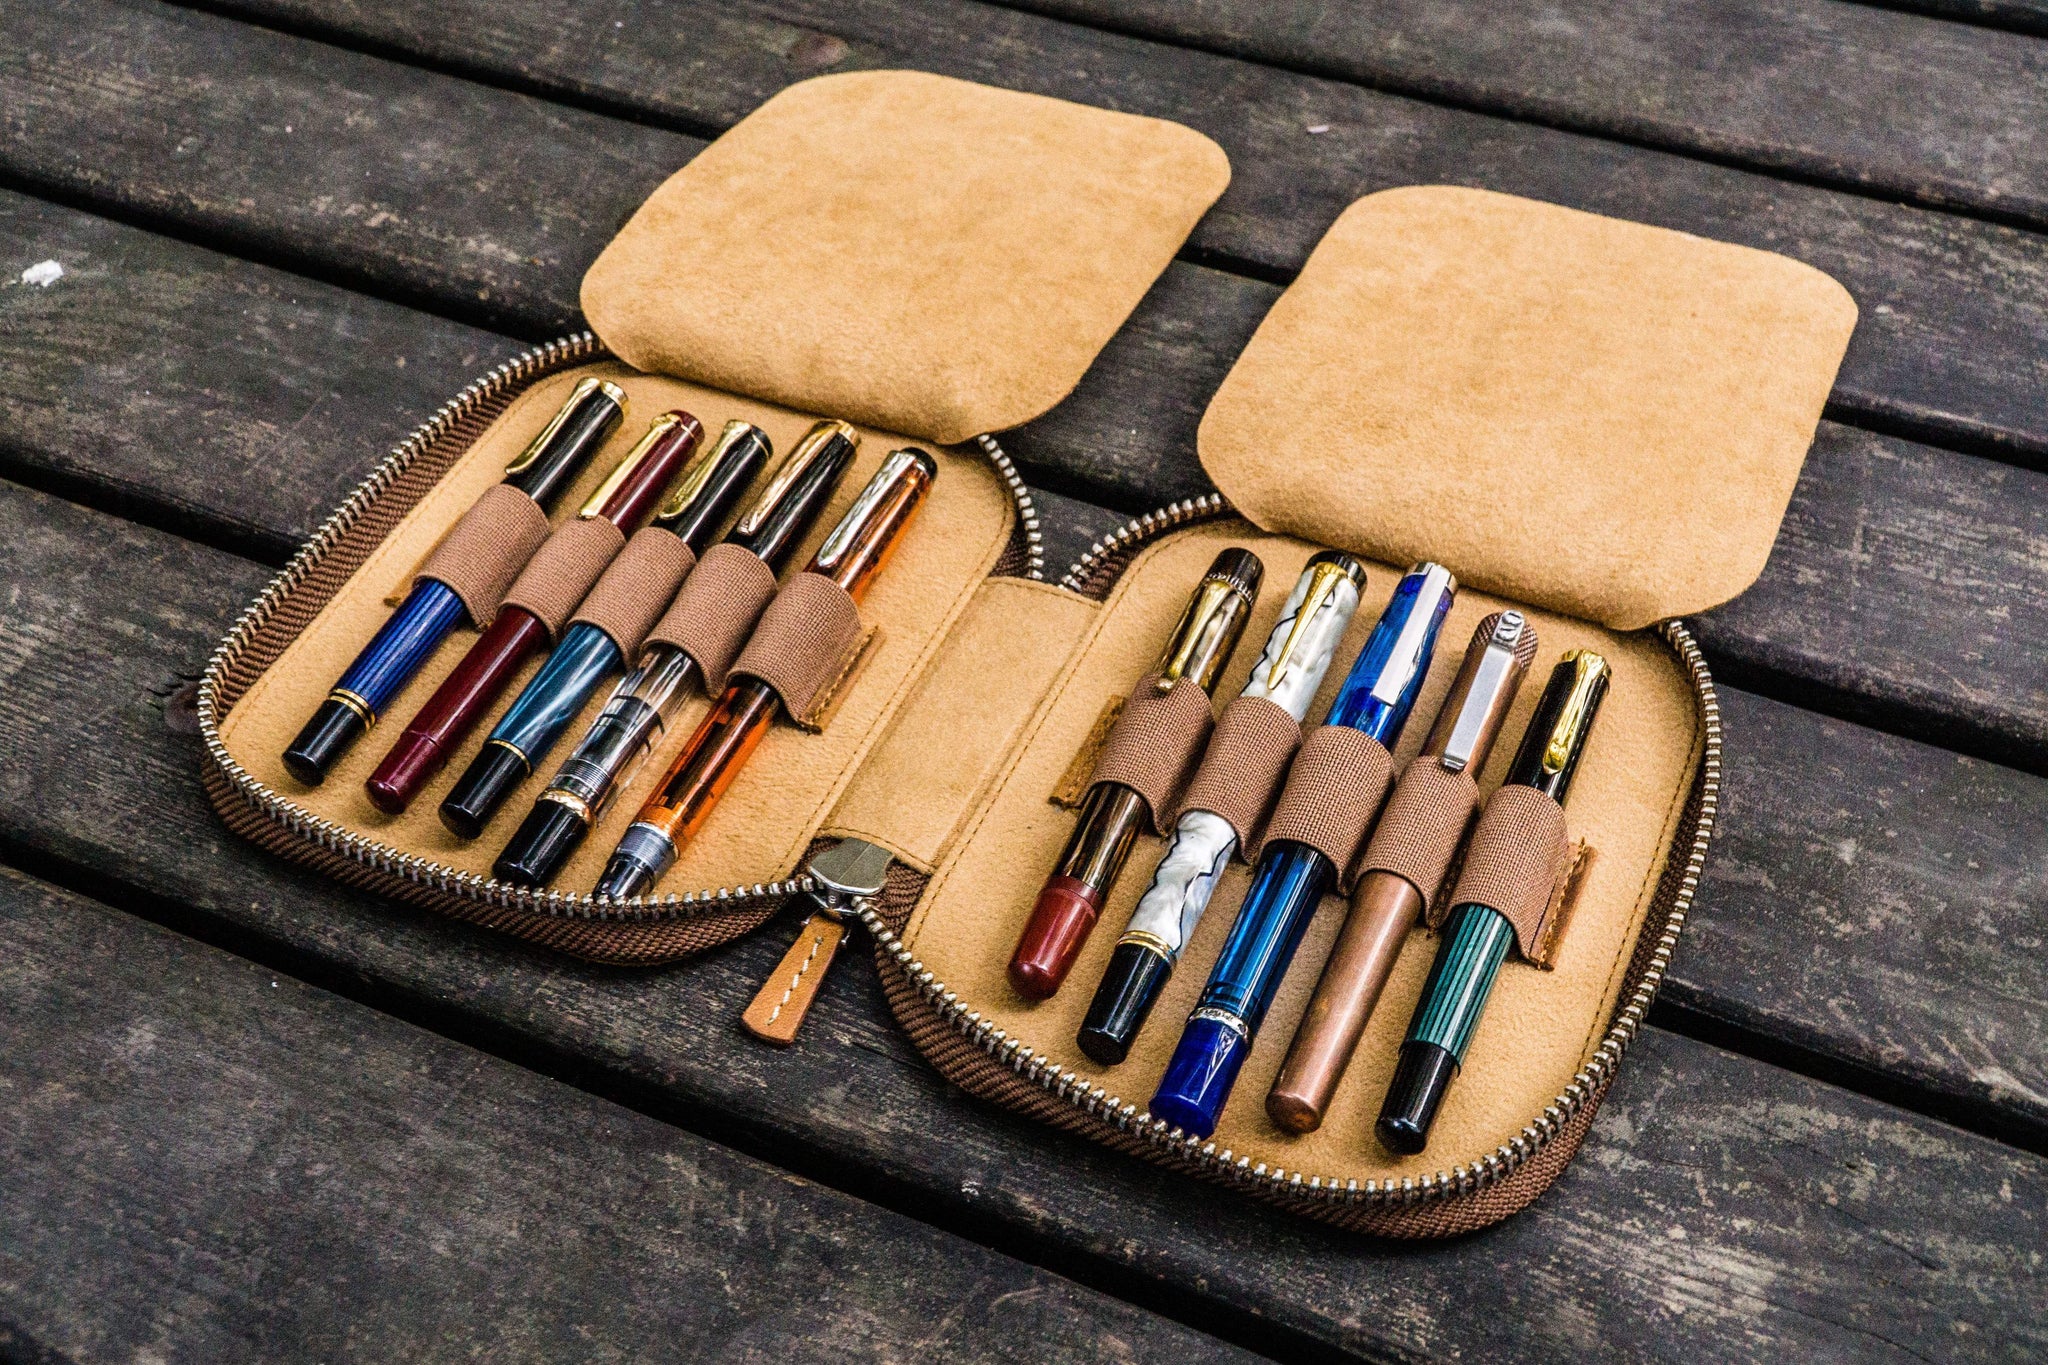 Leather Single Fountain Pen Case/Pen Pouch - Crazy Horse Brown - Galen  Leather